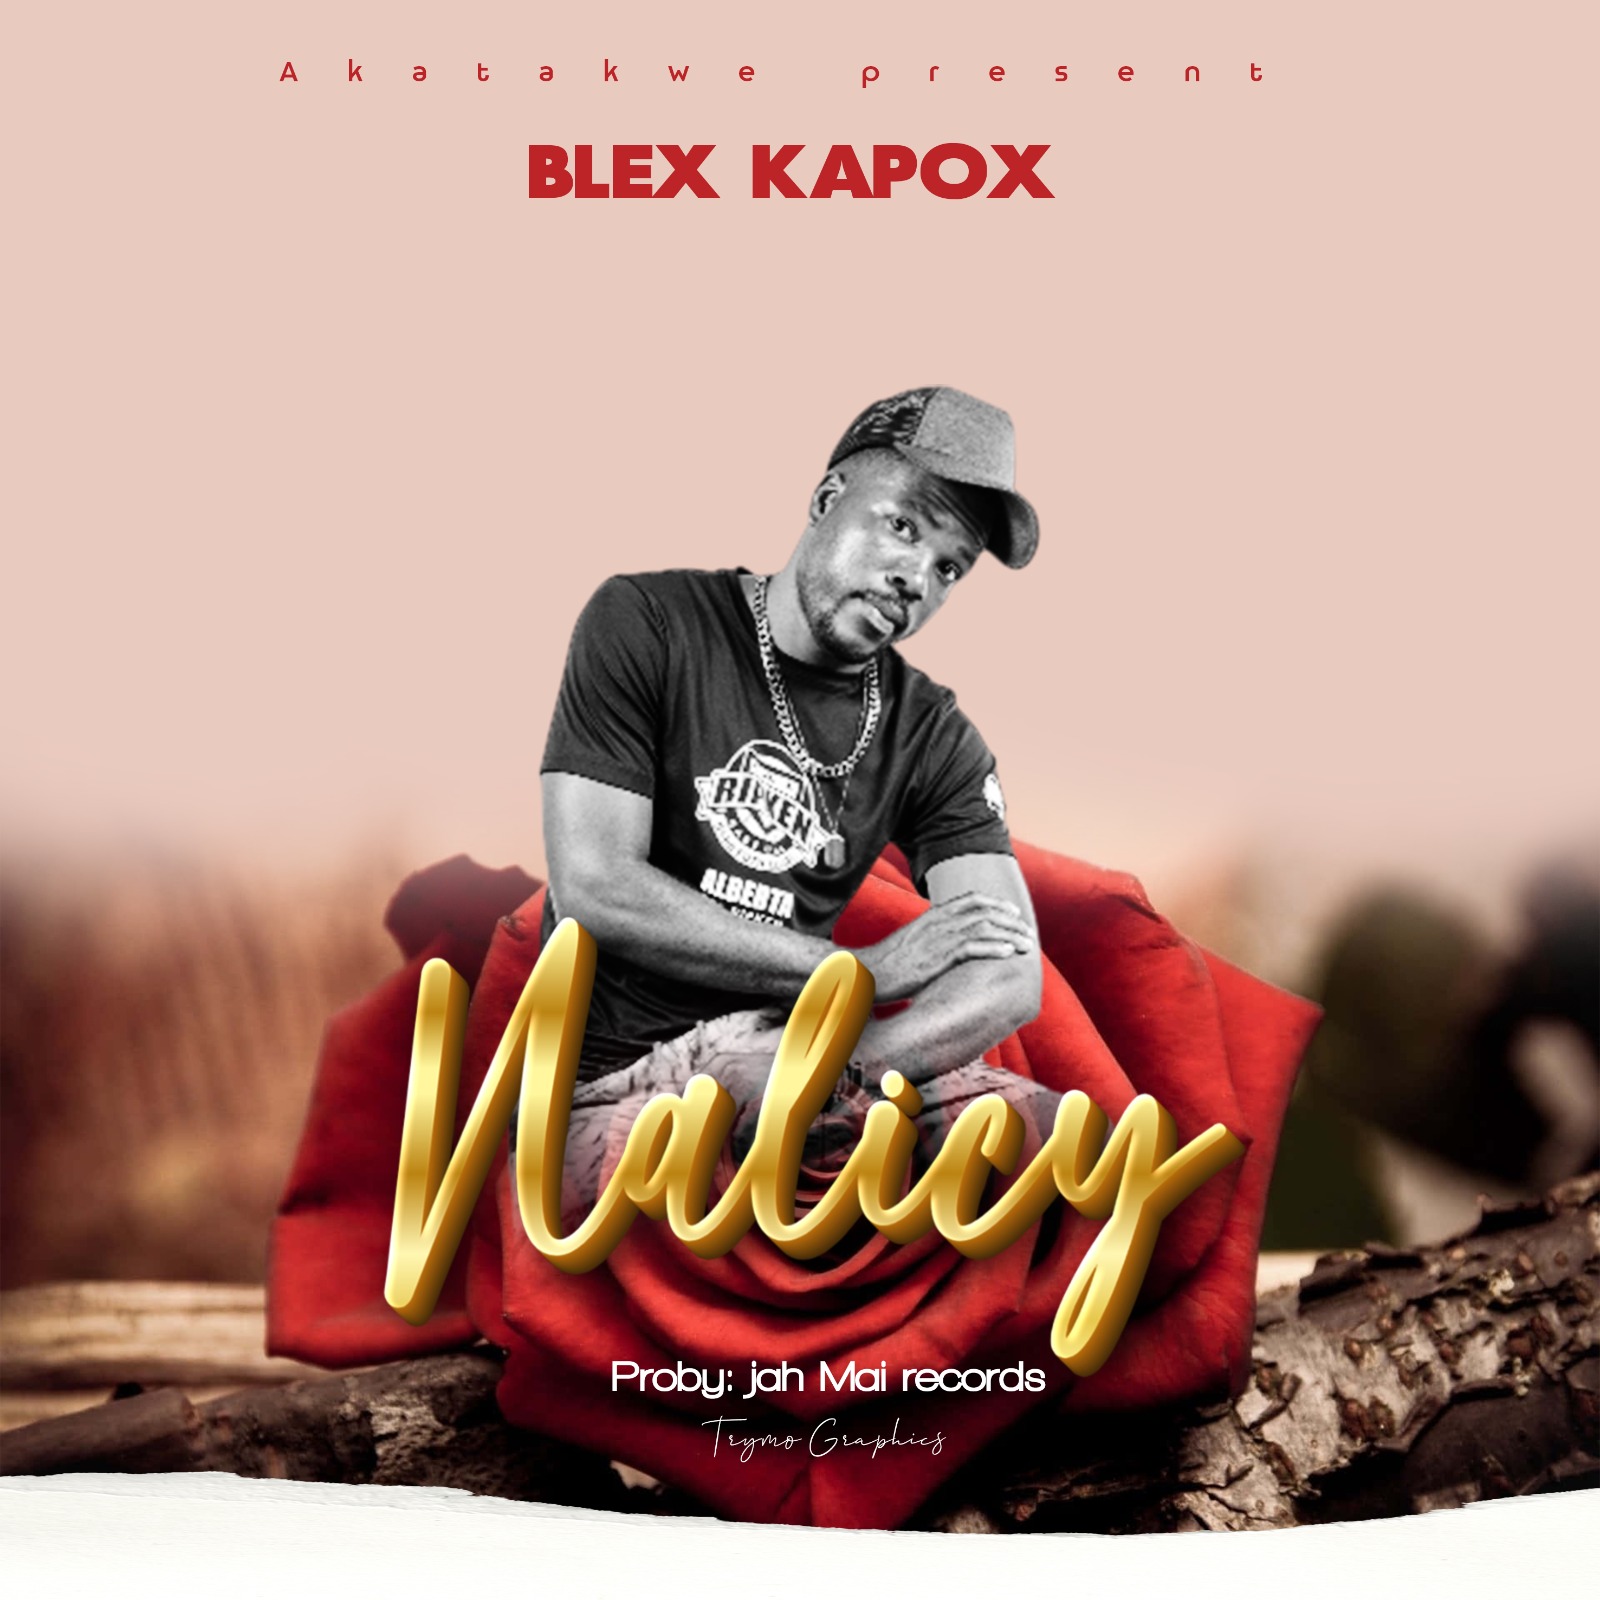 Blex-Kapox-Nalicy-prod-by-jah-mai-records